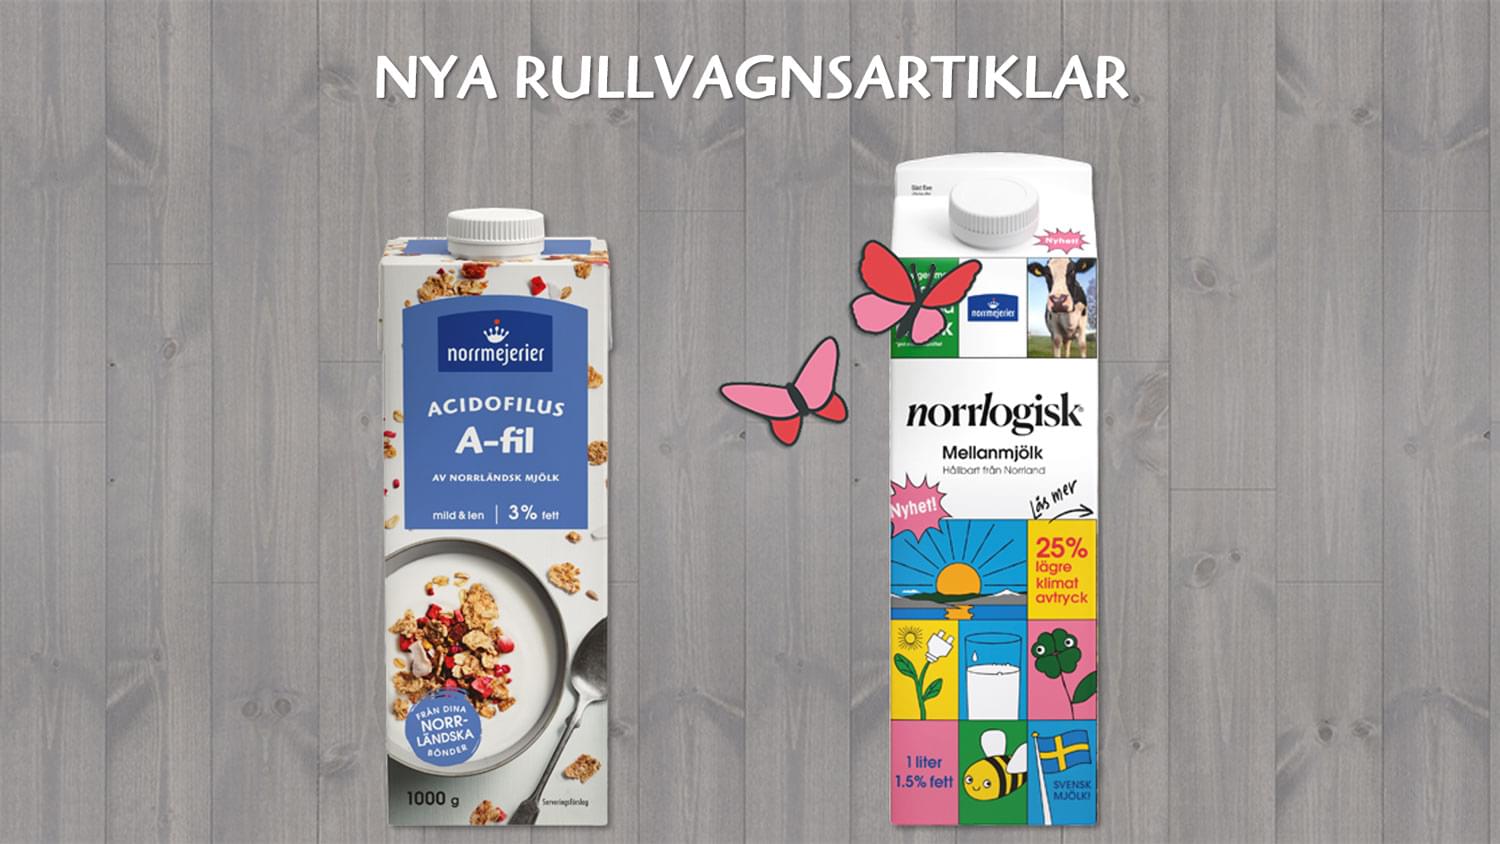 NYHETER Vecka 36 - Norrlogisk mjölk 1L samt A-fil på rullvagn